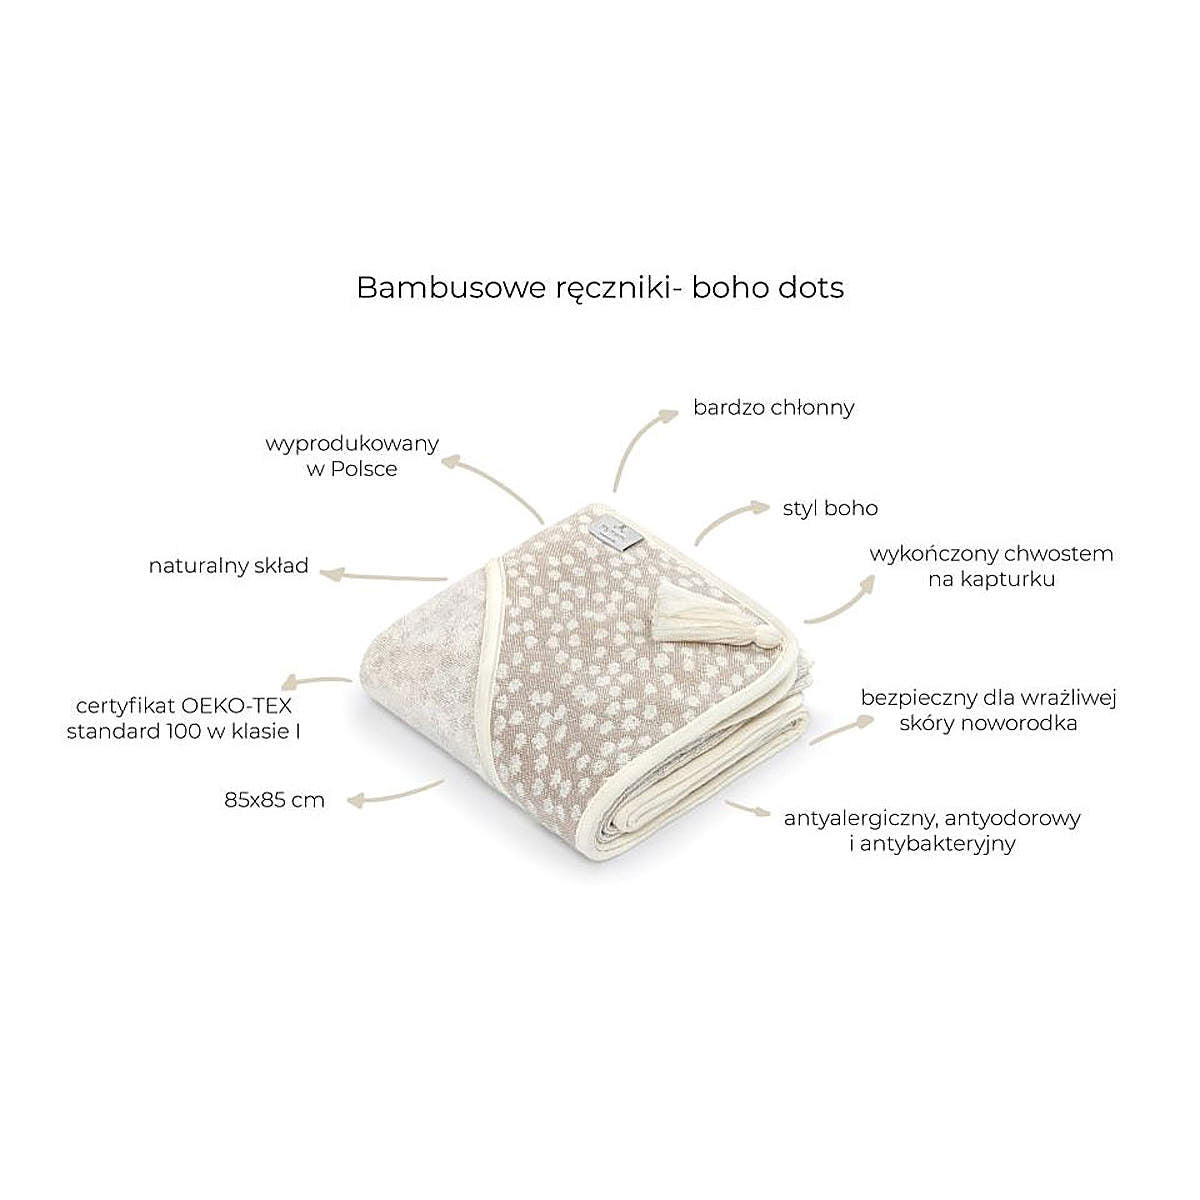 Bambusowy ręcznik - boho dots / leaves - My Memi dots cream